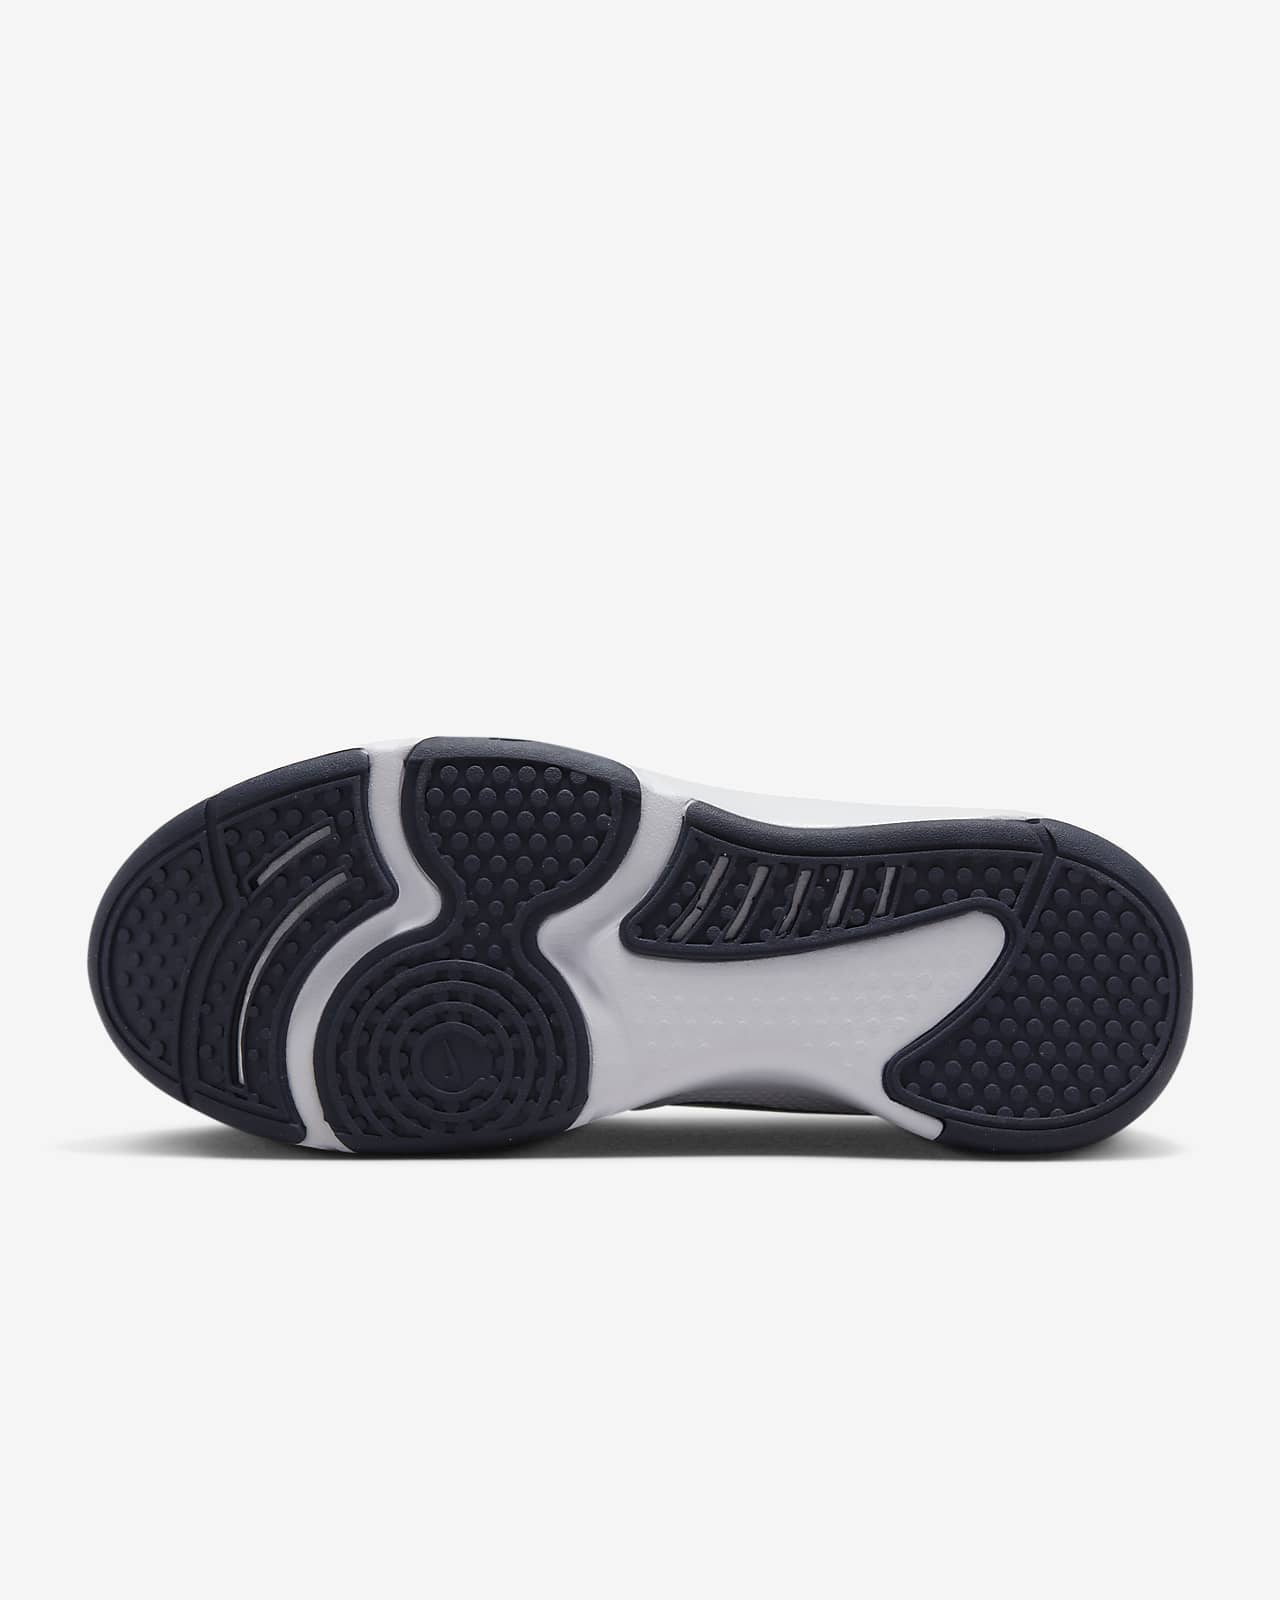 Nike Air Max Plus Triple White/Black-Cool Grey Men's Running Shoes  604133-139 - Walmart.com